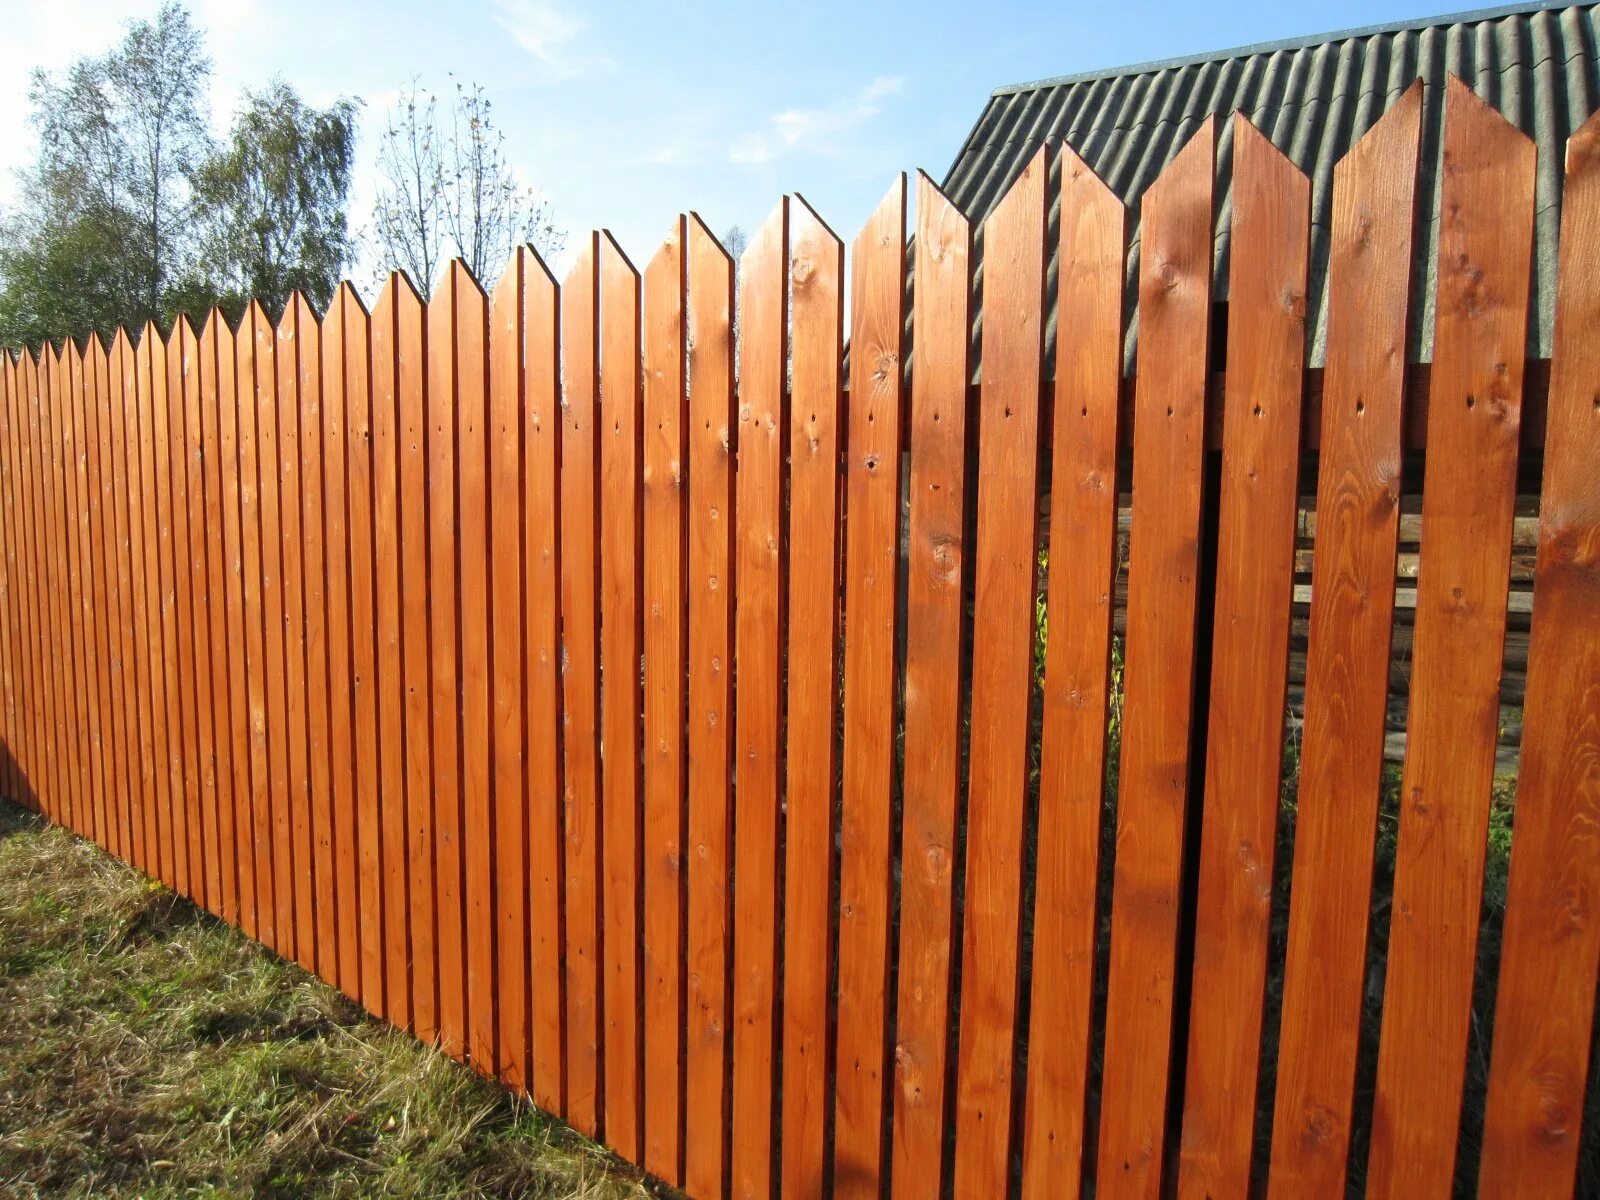 Antique Wood Гранд лайн штакетник. Деревянный забор. Забор из штакетника деревянного. Забор штакетник деревянный.